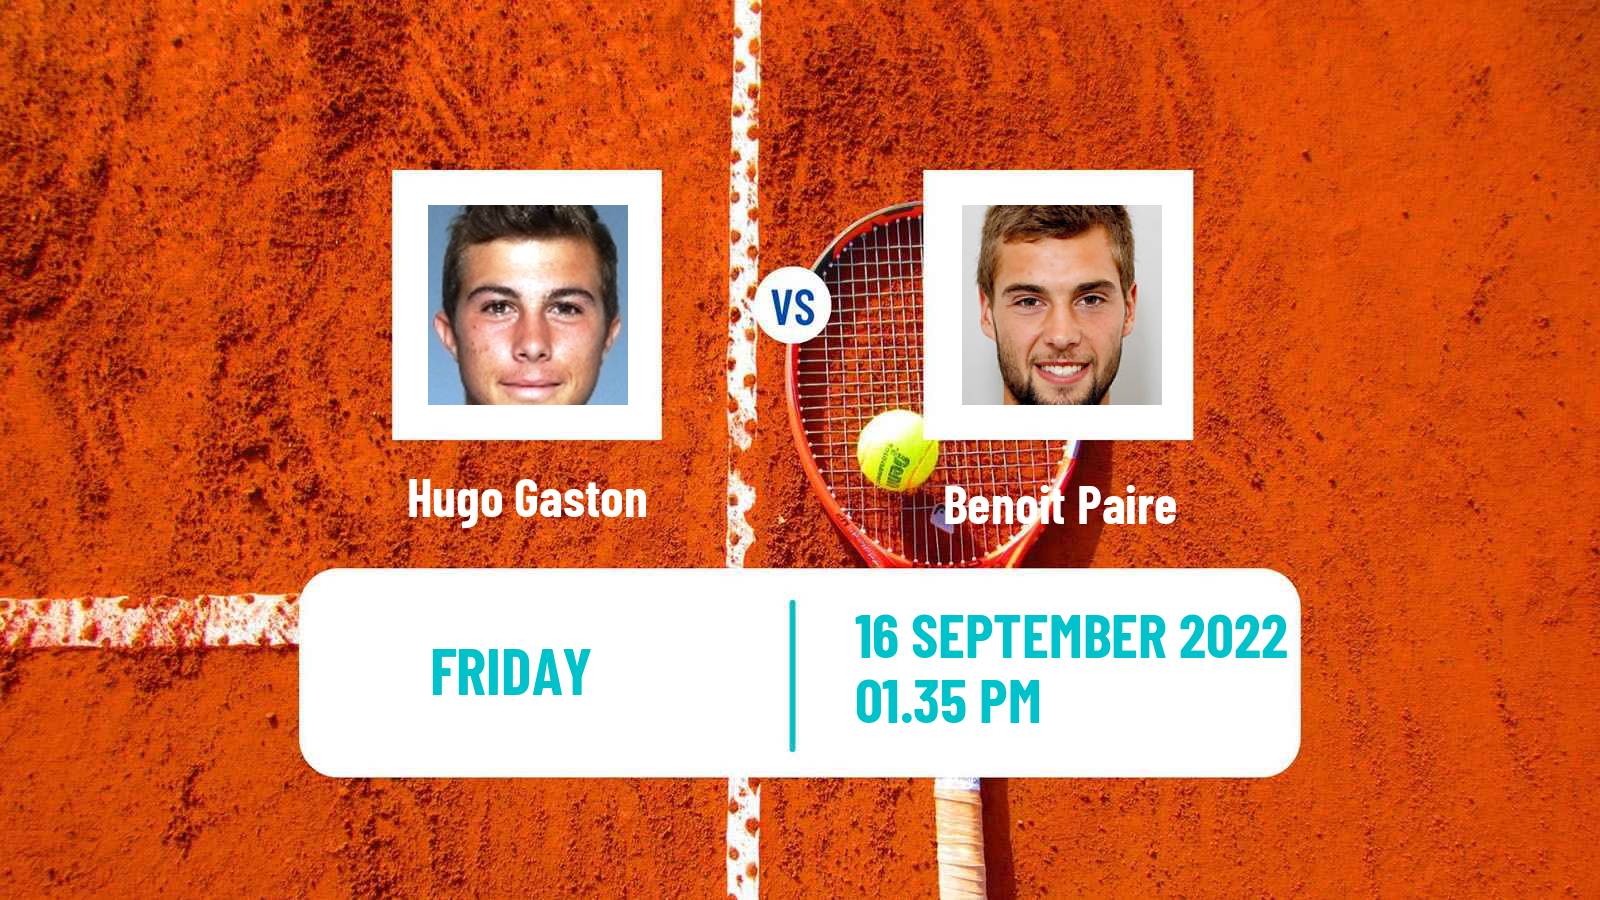 Tennis ATP Challenger Hugo Gaston - Benoit Paire